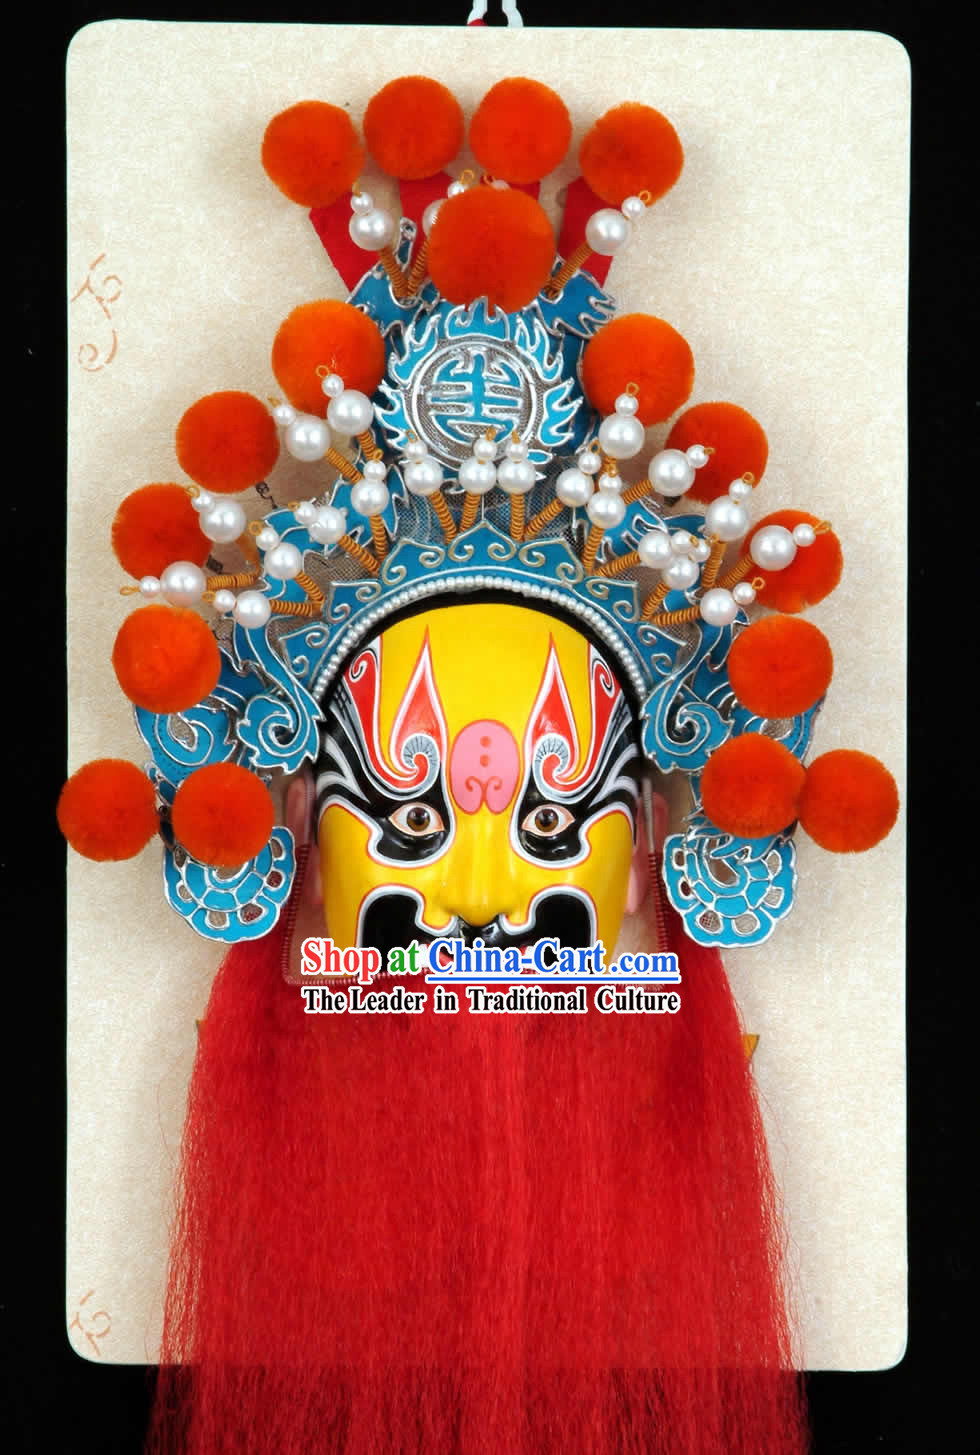 Handcrafted Peking Opera Mask Hanging Decoration - Dian Wei